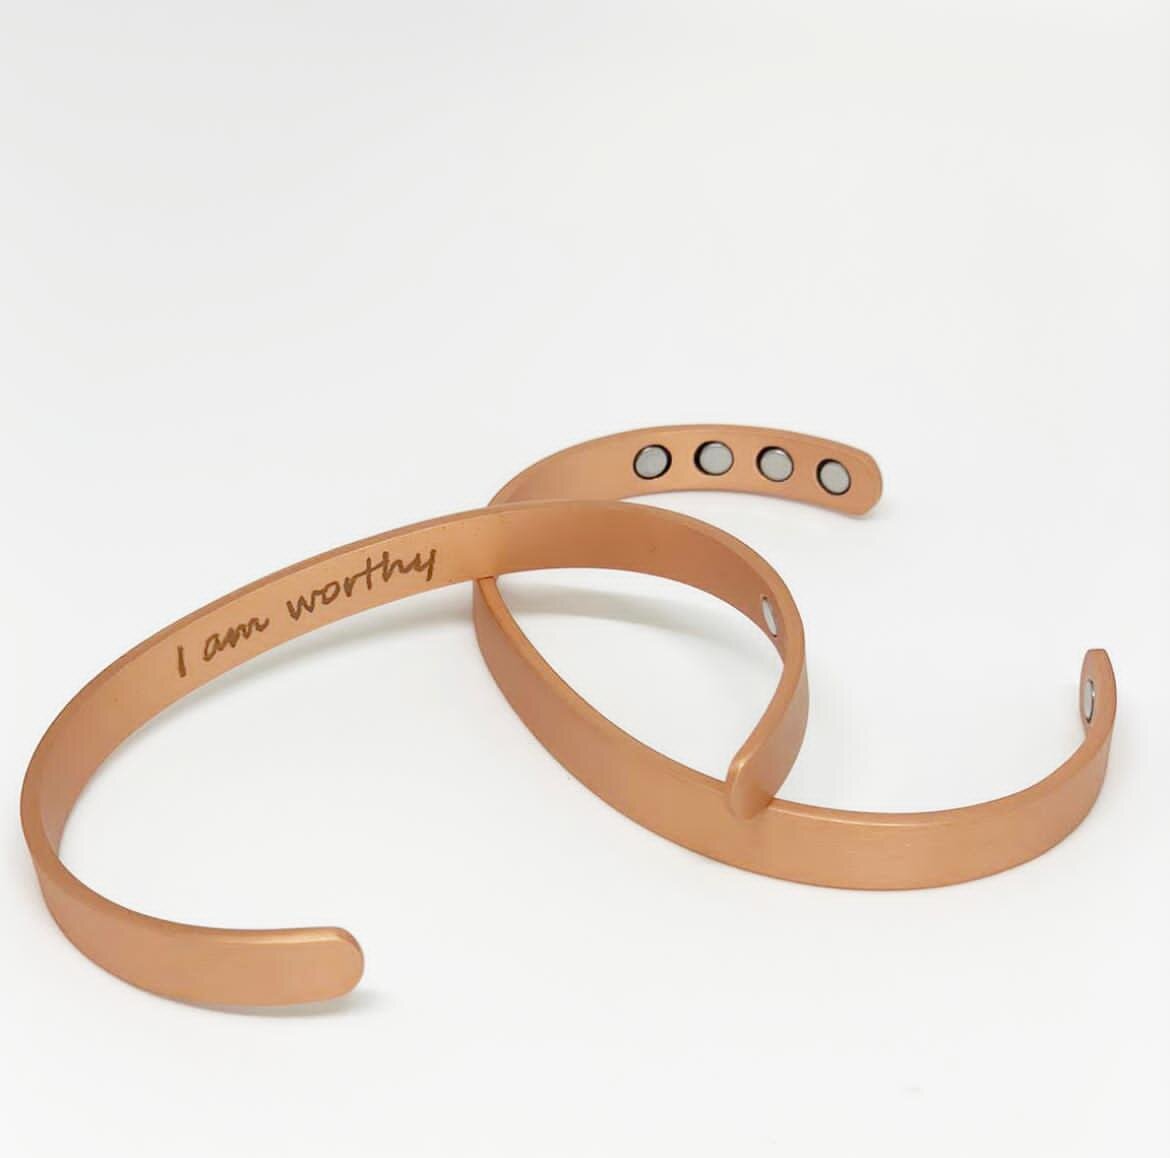 Copper Bracelet for RSI